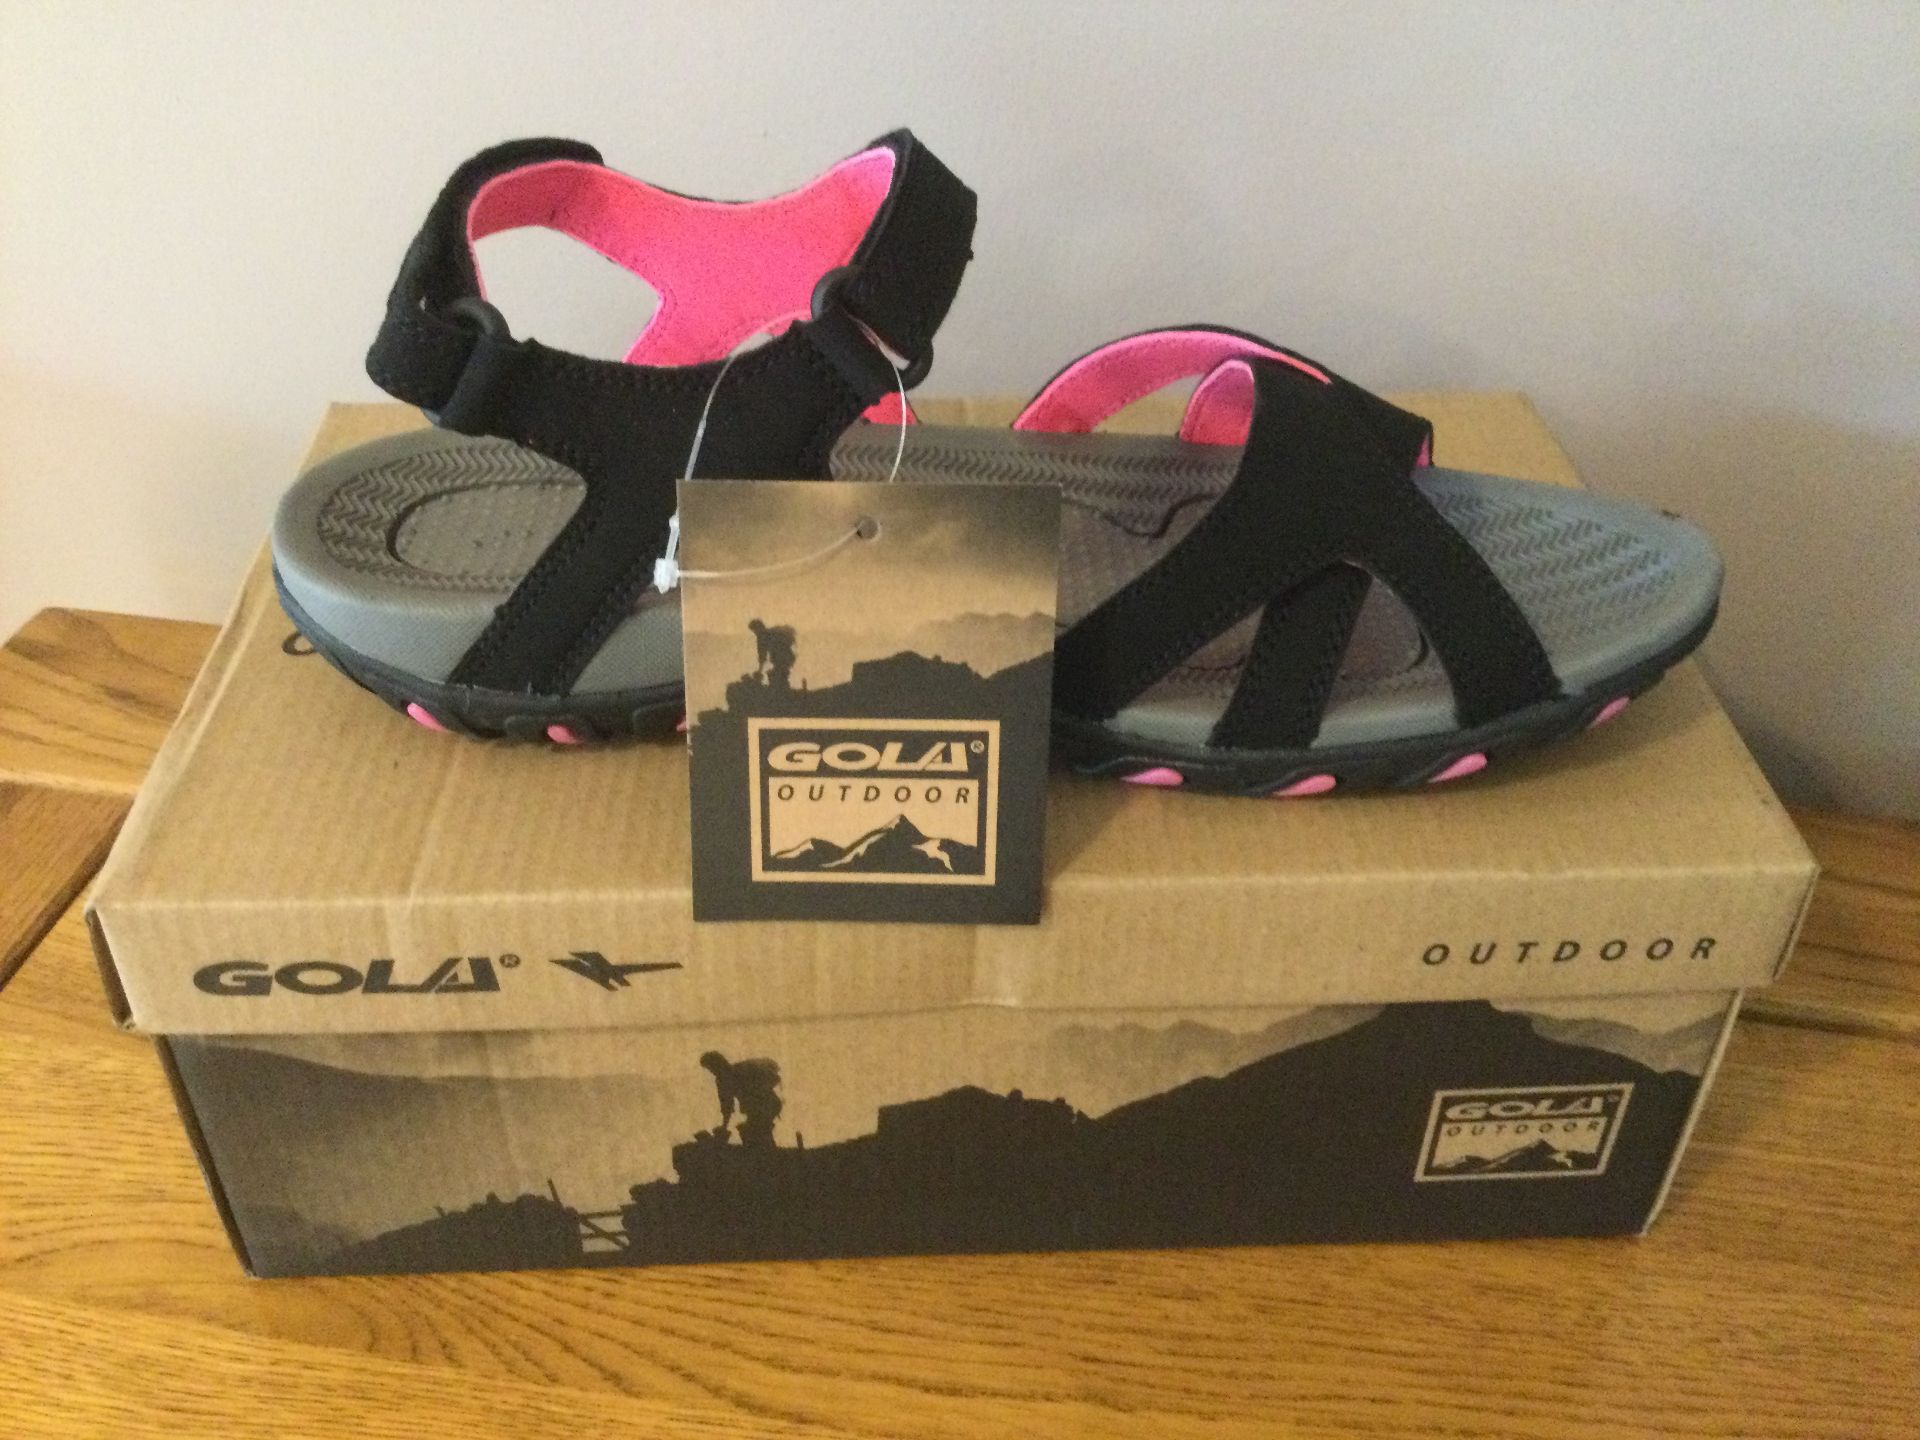 Gola Women's “Cedar” Hiking Sandals, Black/Hot Pink, Size 7 - Brand New - Image 2 of 4